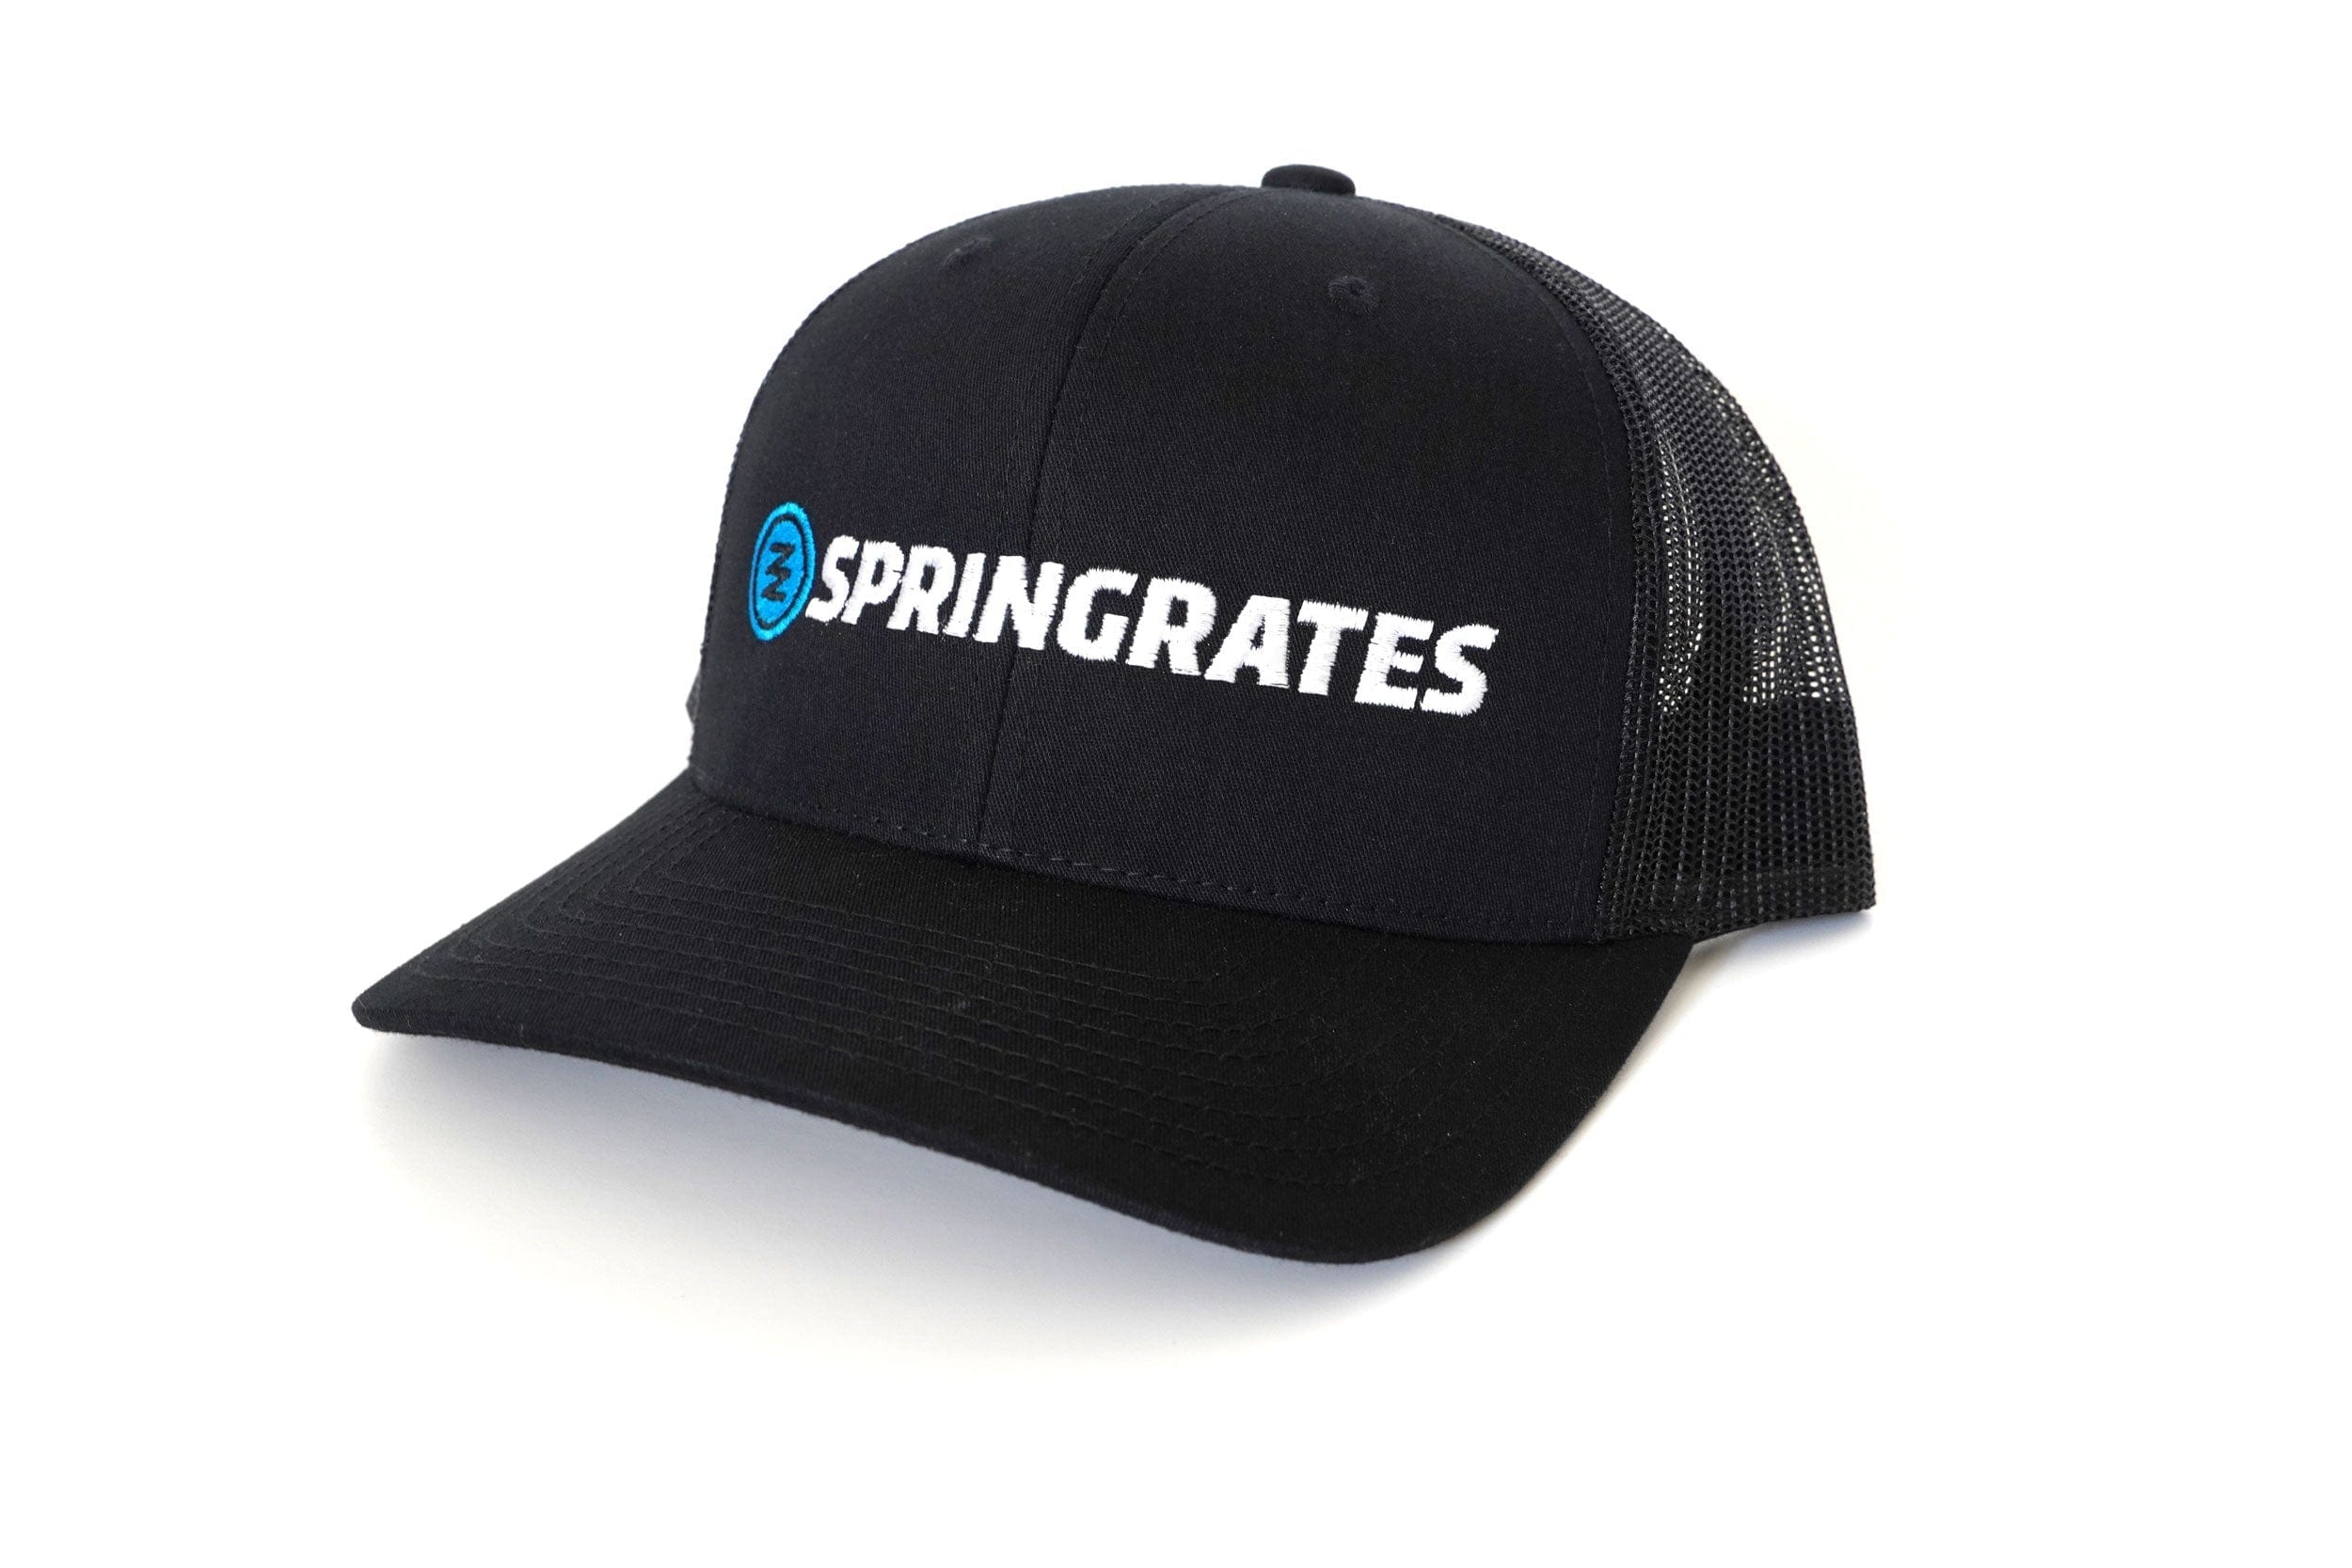 Springrates 'Logo' Snapback Hat - Black SR04